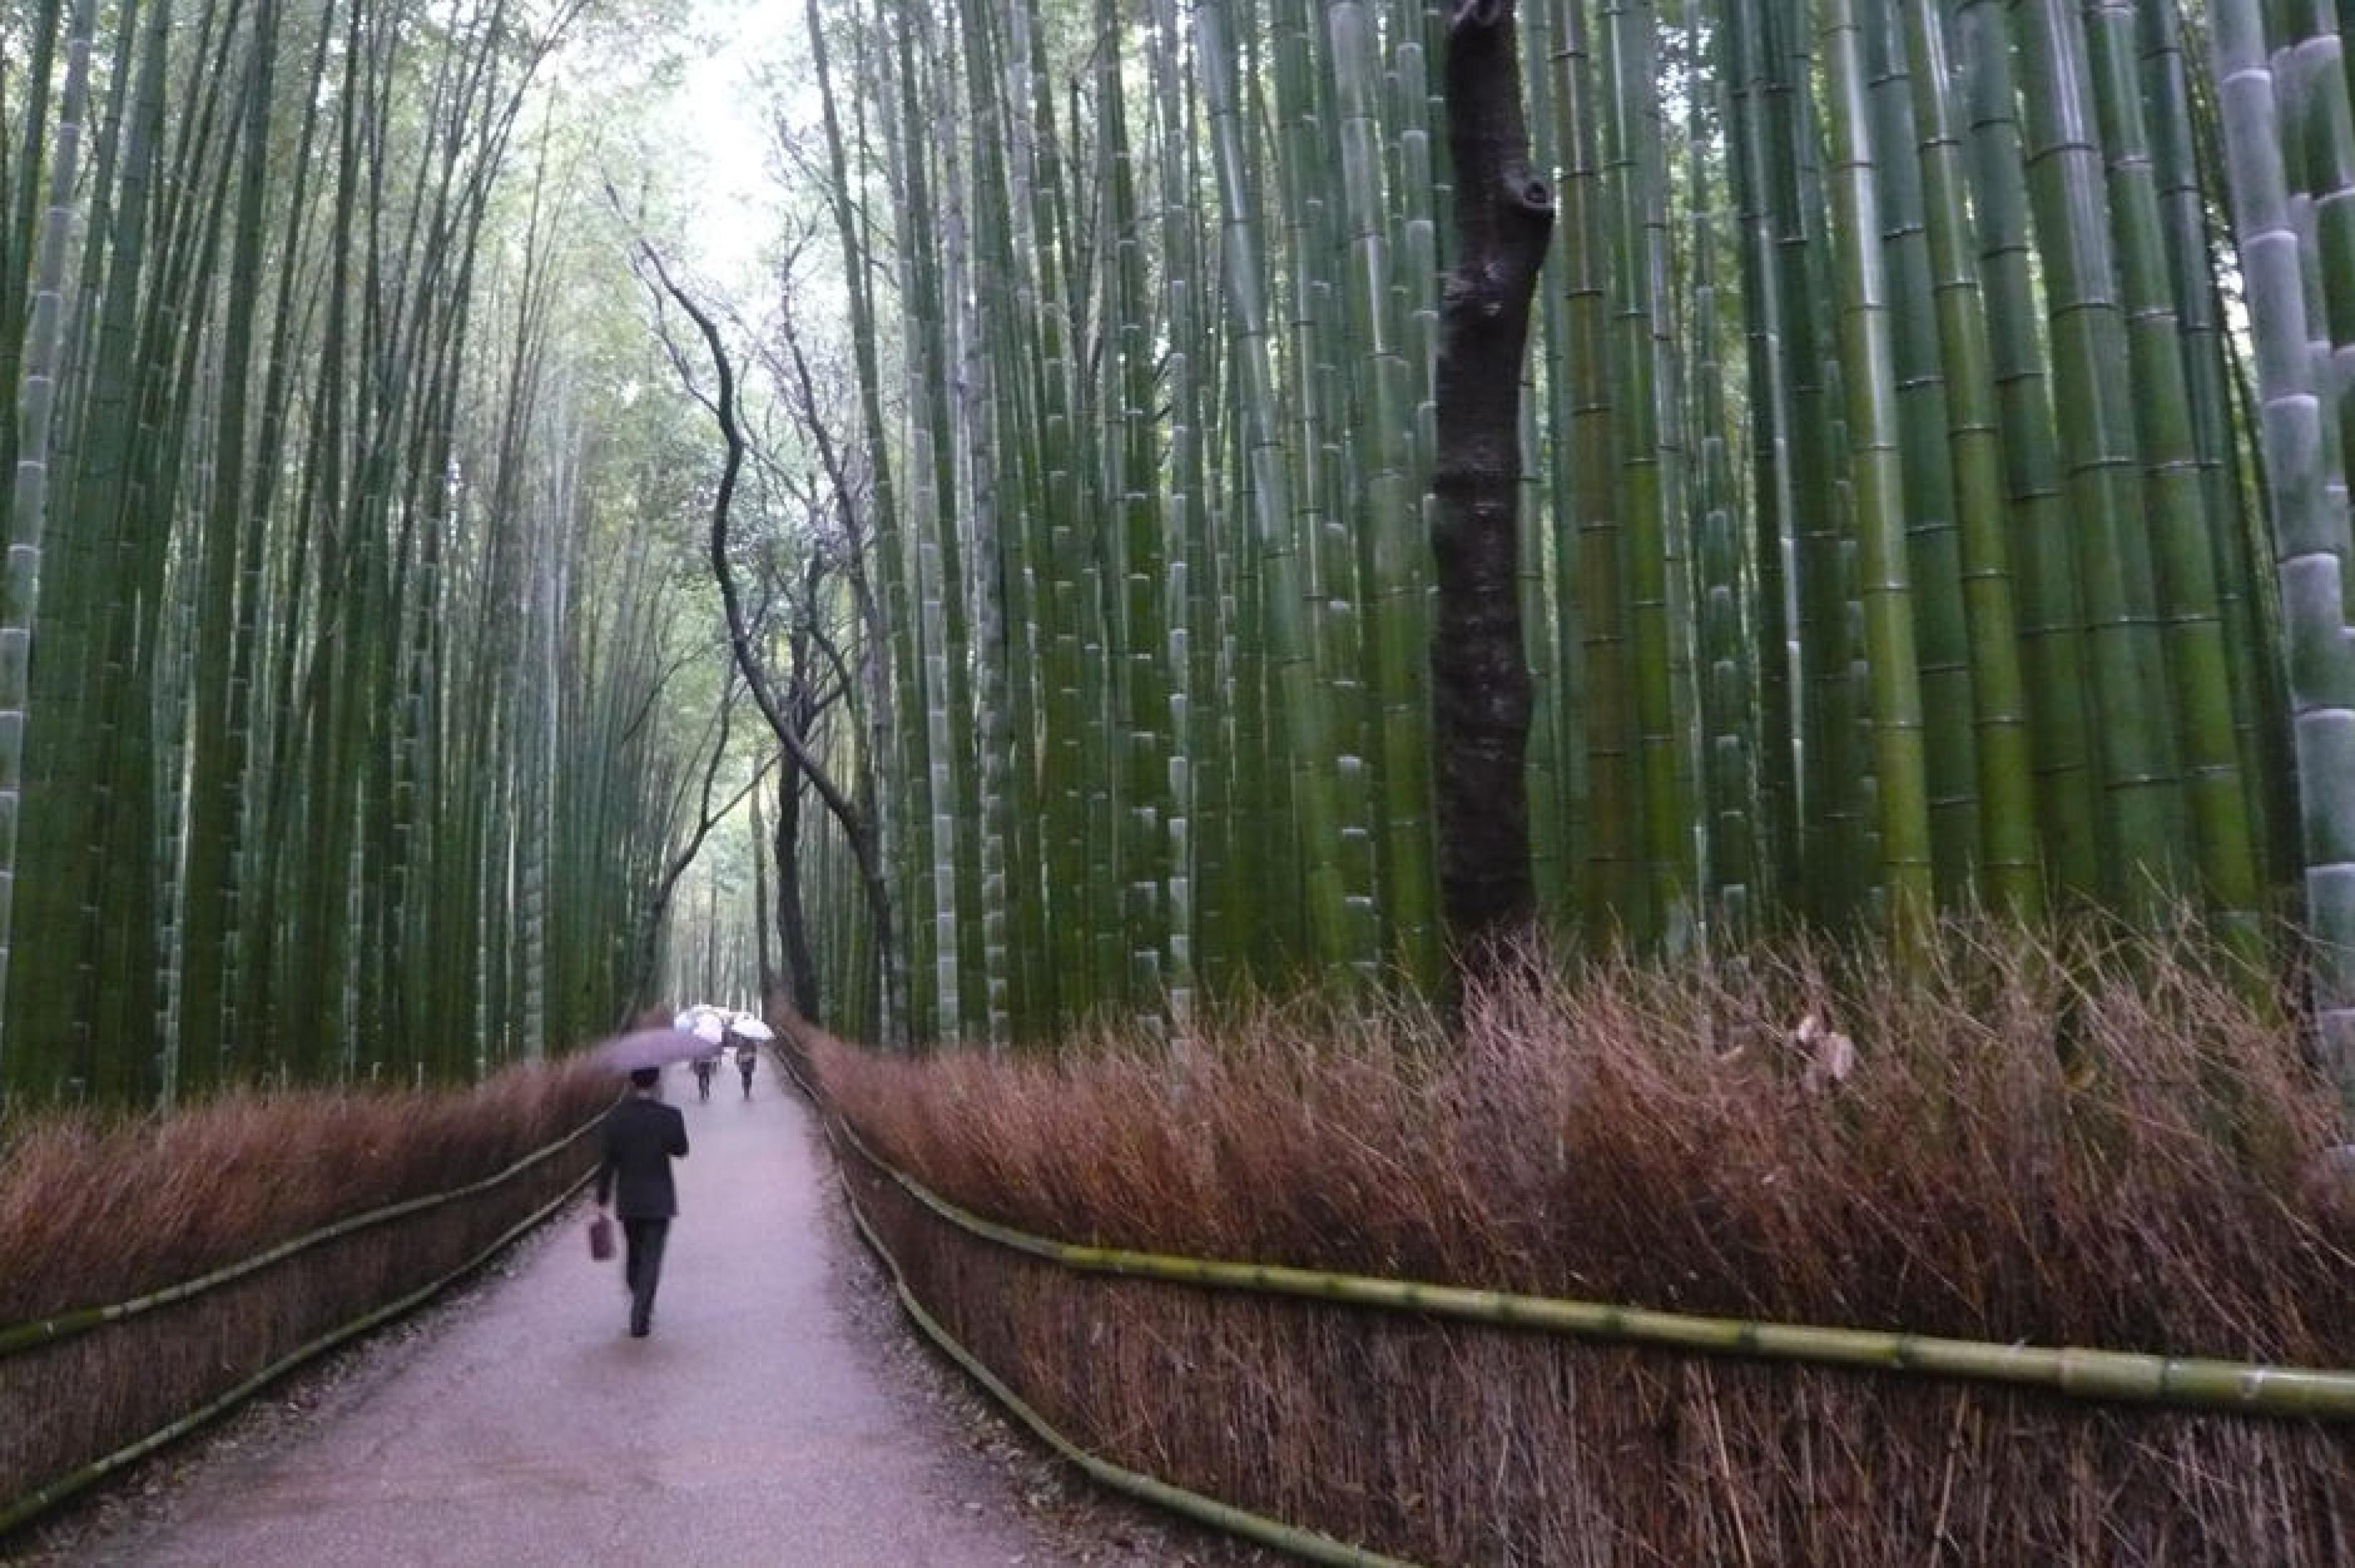 Walkway in bamboo grooves at Arashiyama Area, Kyoto, Japan